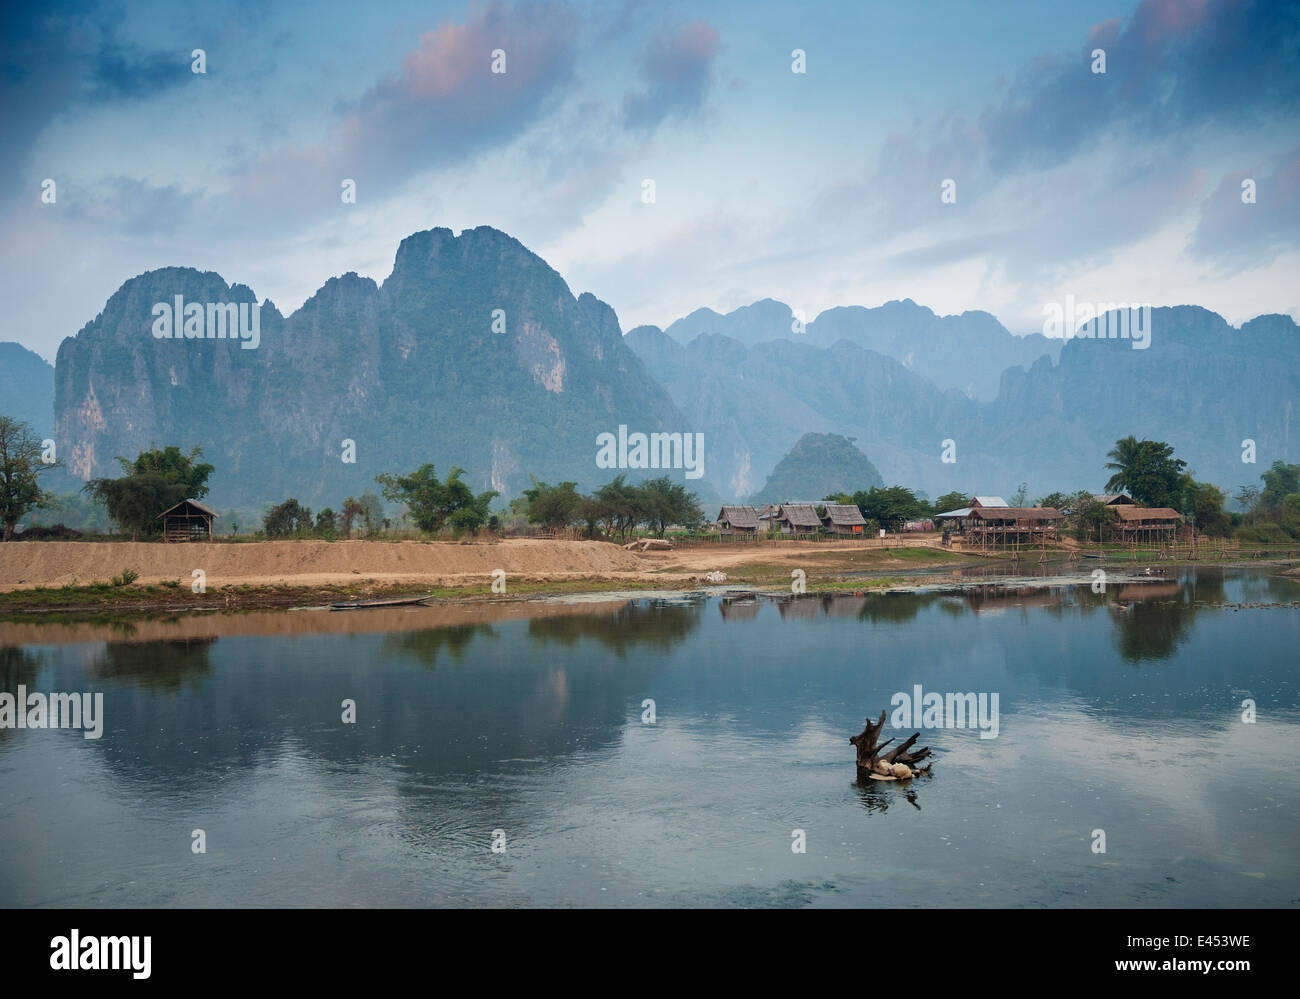 Paisaje cárstico y río de Vang Vieng laos Foto de stock